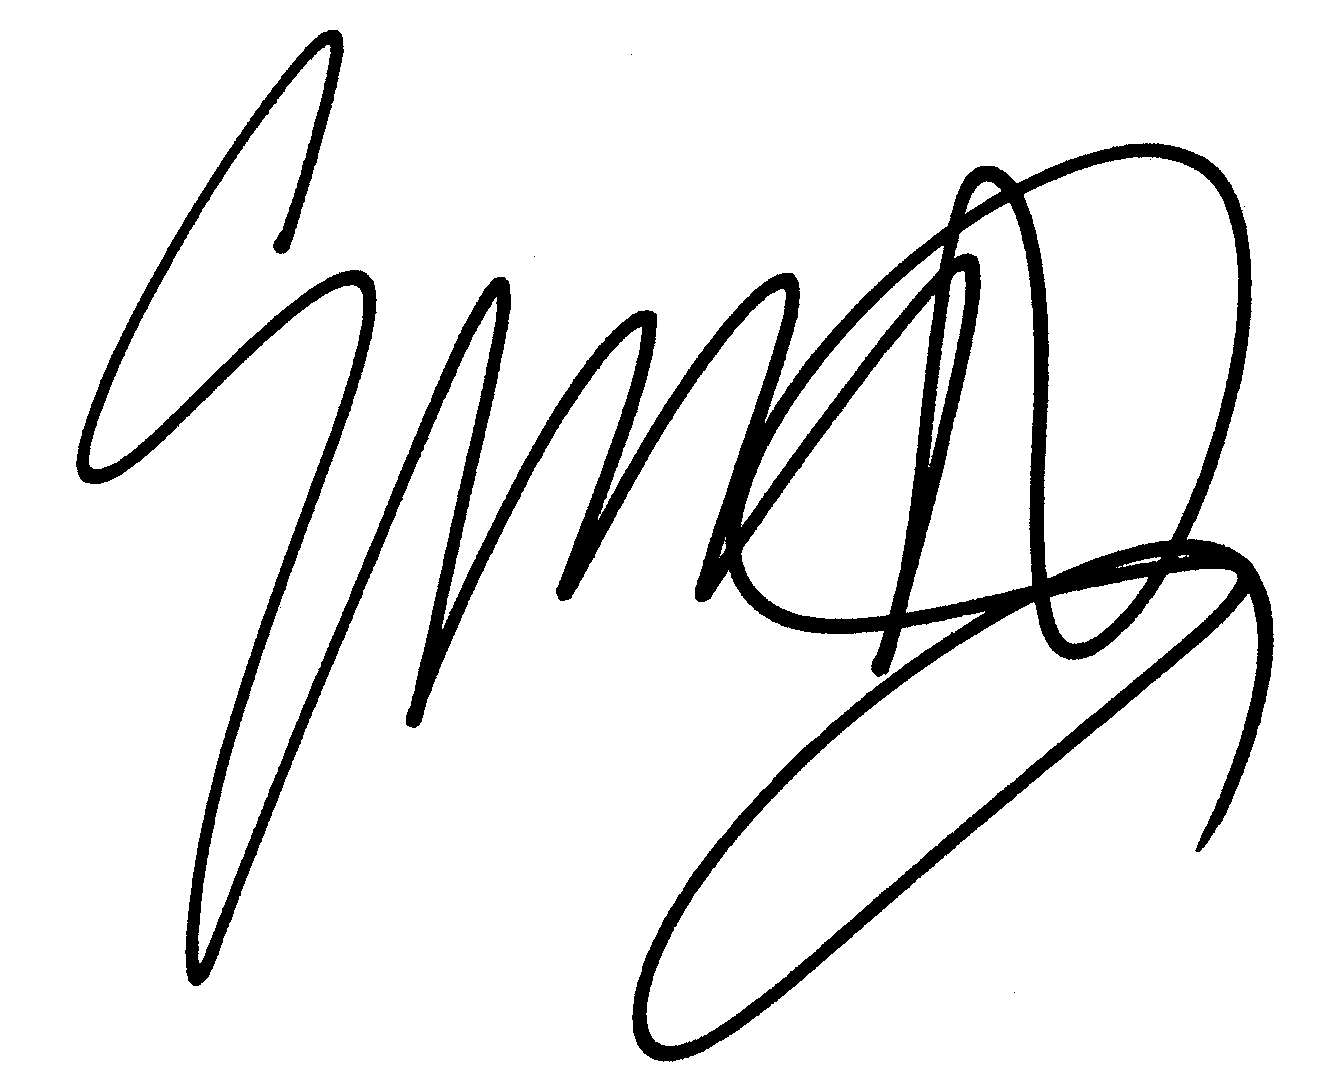 Gavin Rosdale autograph facsimile